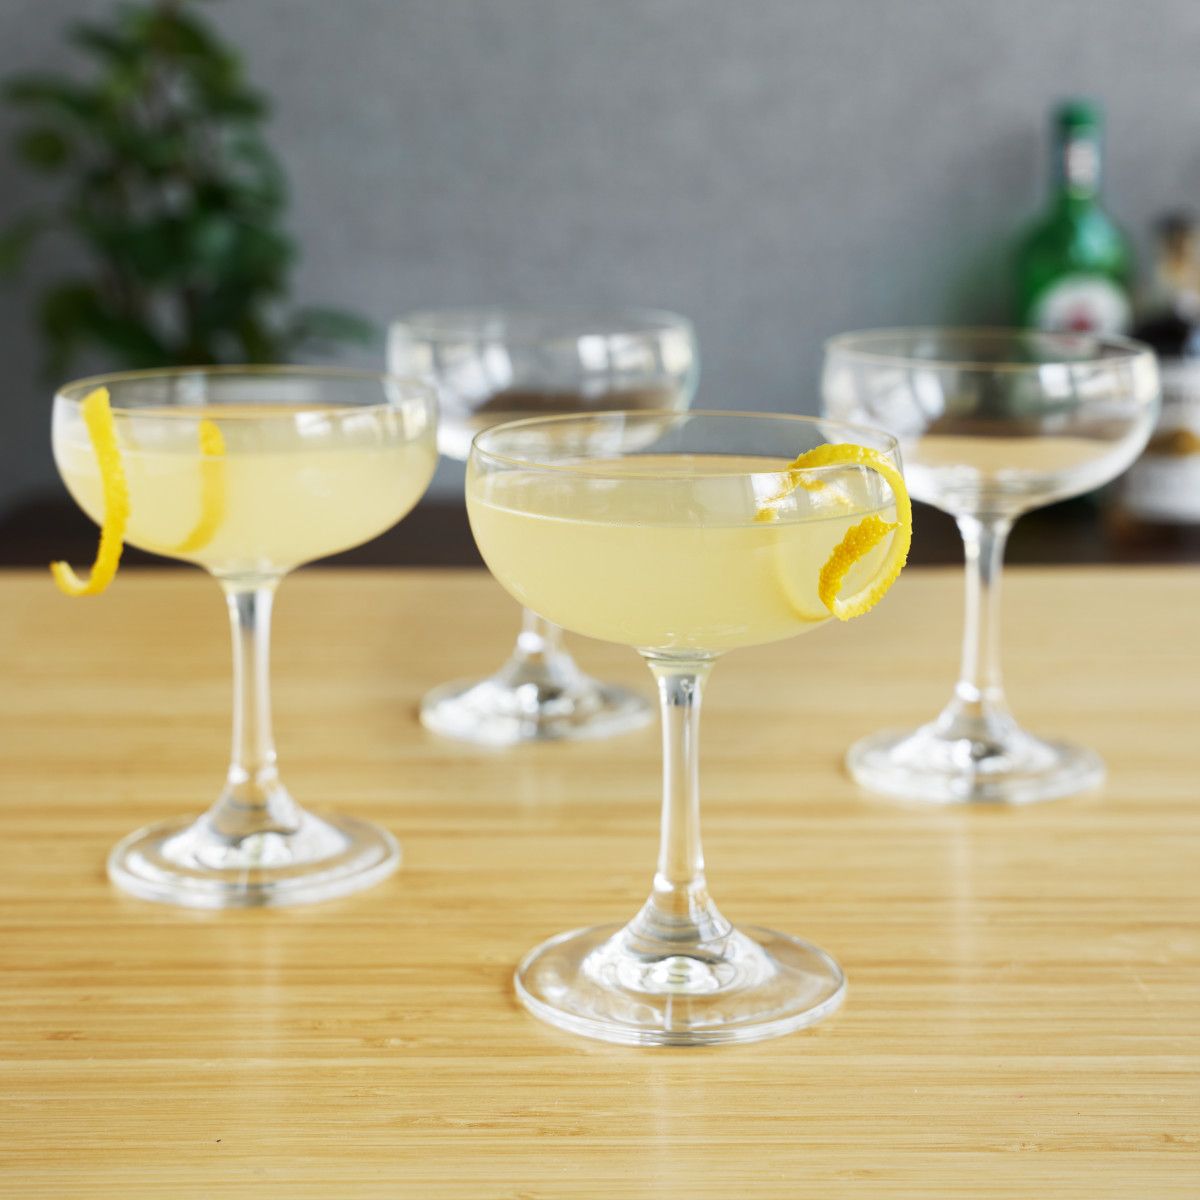 True Manhattan Martini Glass - Set of 4